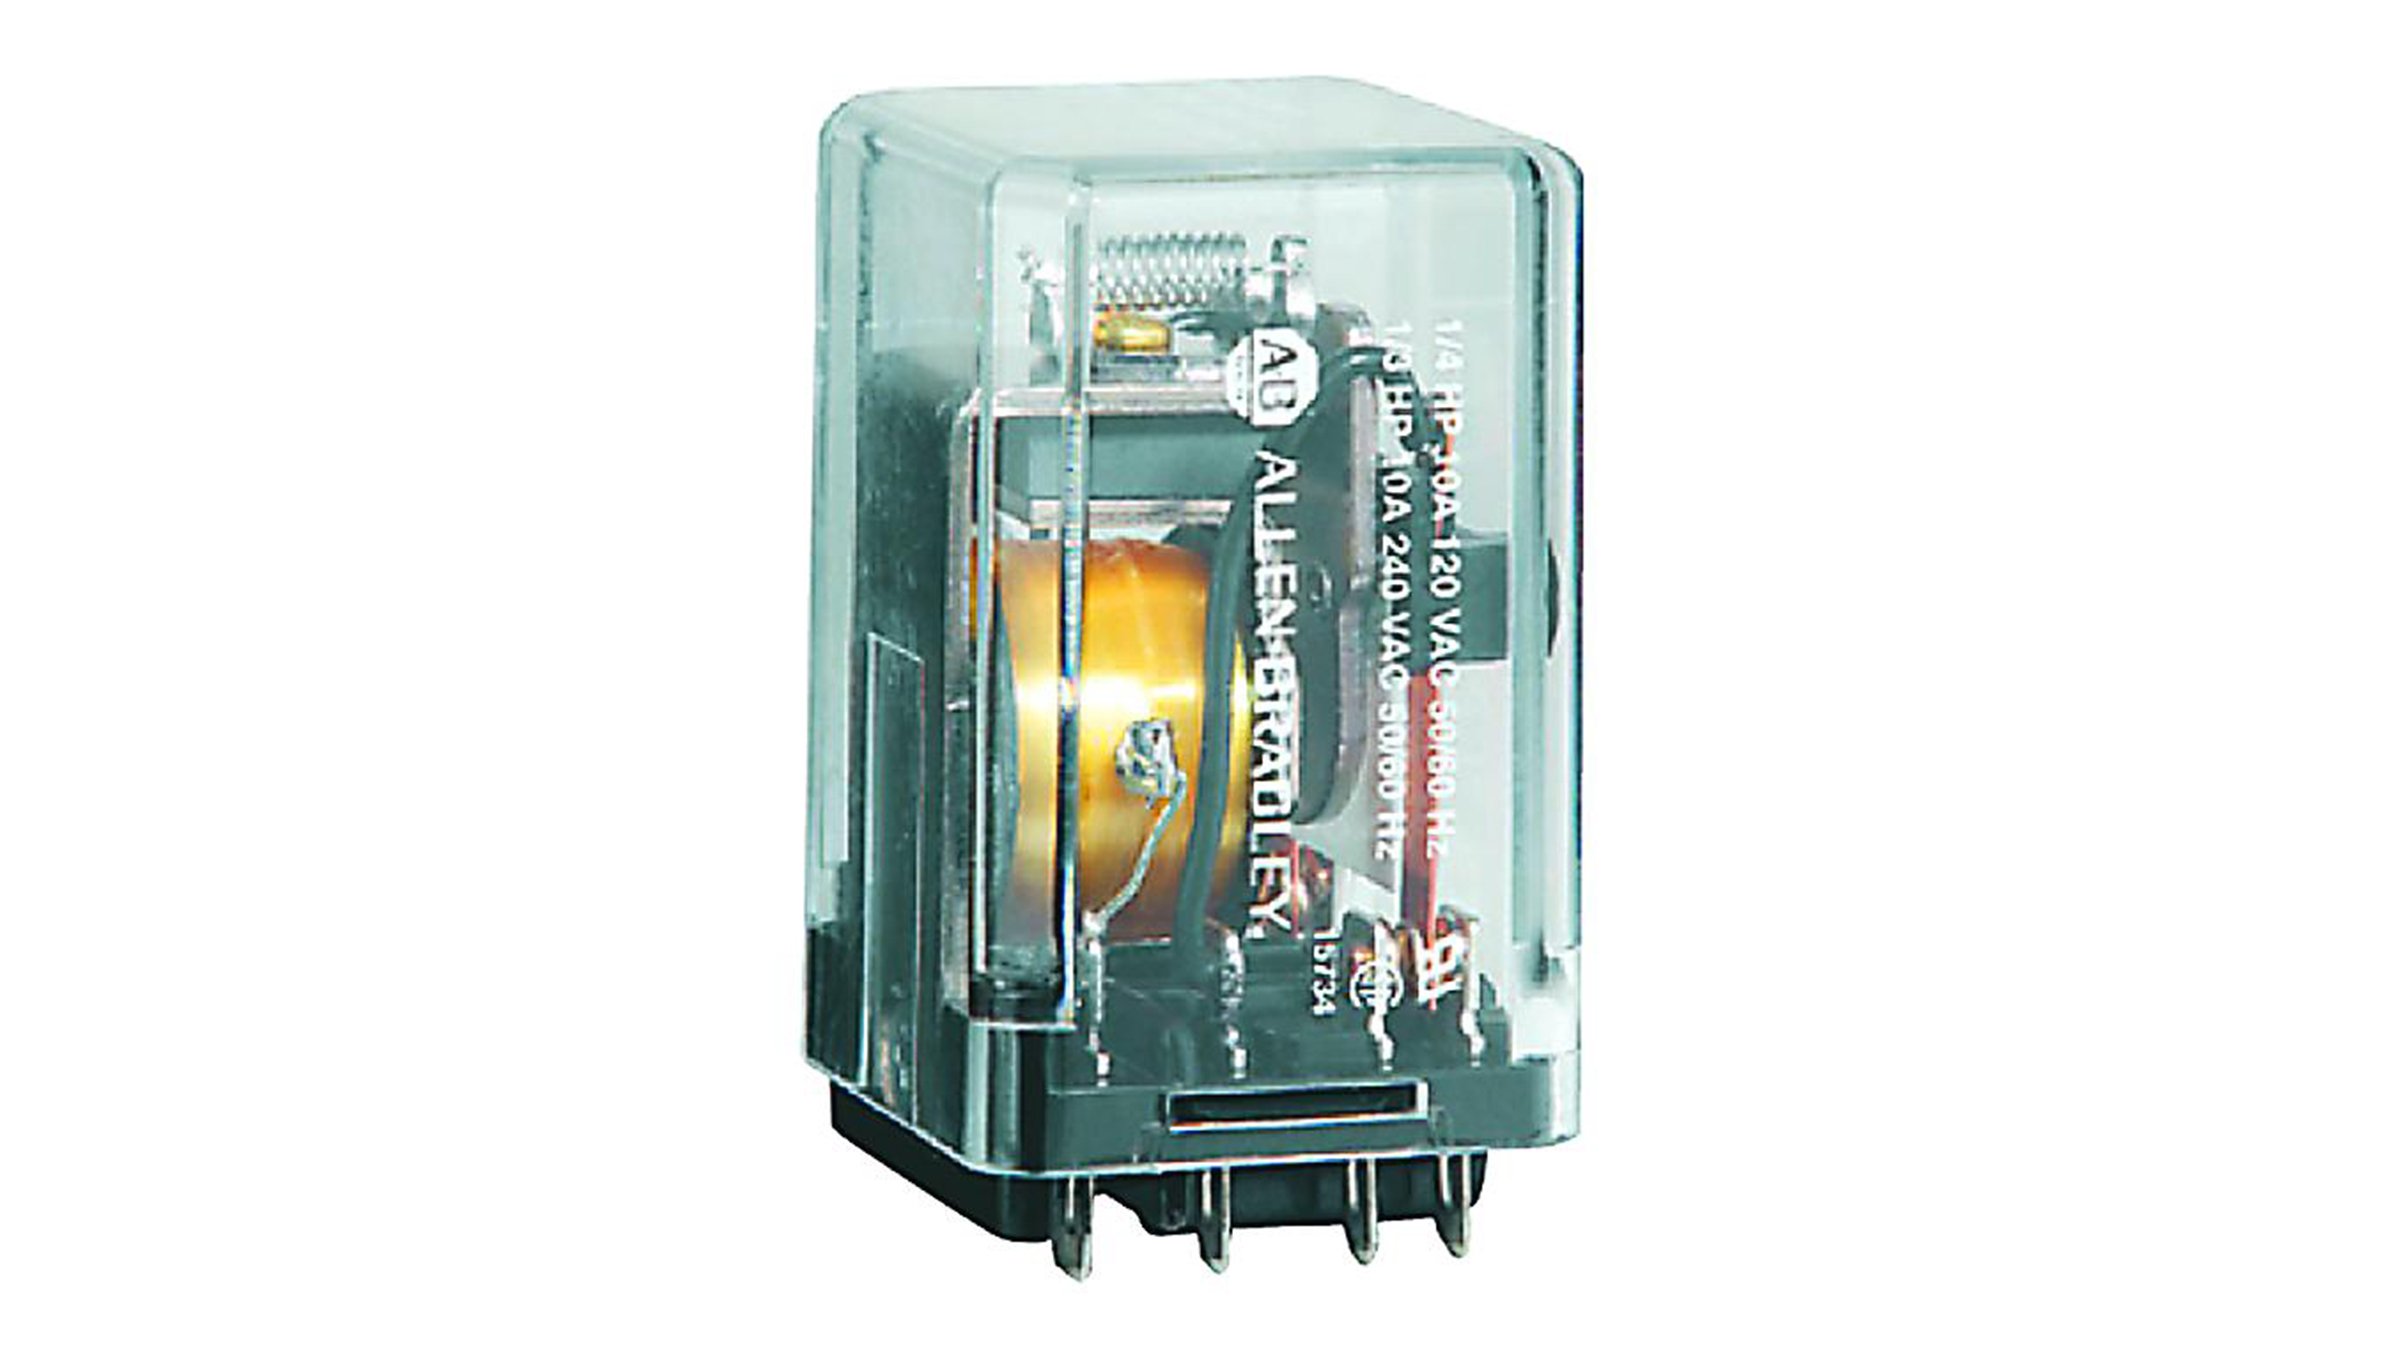 Allen-Bradley Bulletin 700-HJ 磁闭锁继电器可控制照明负载或连续型负载应用以实现节能。